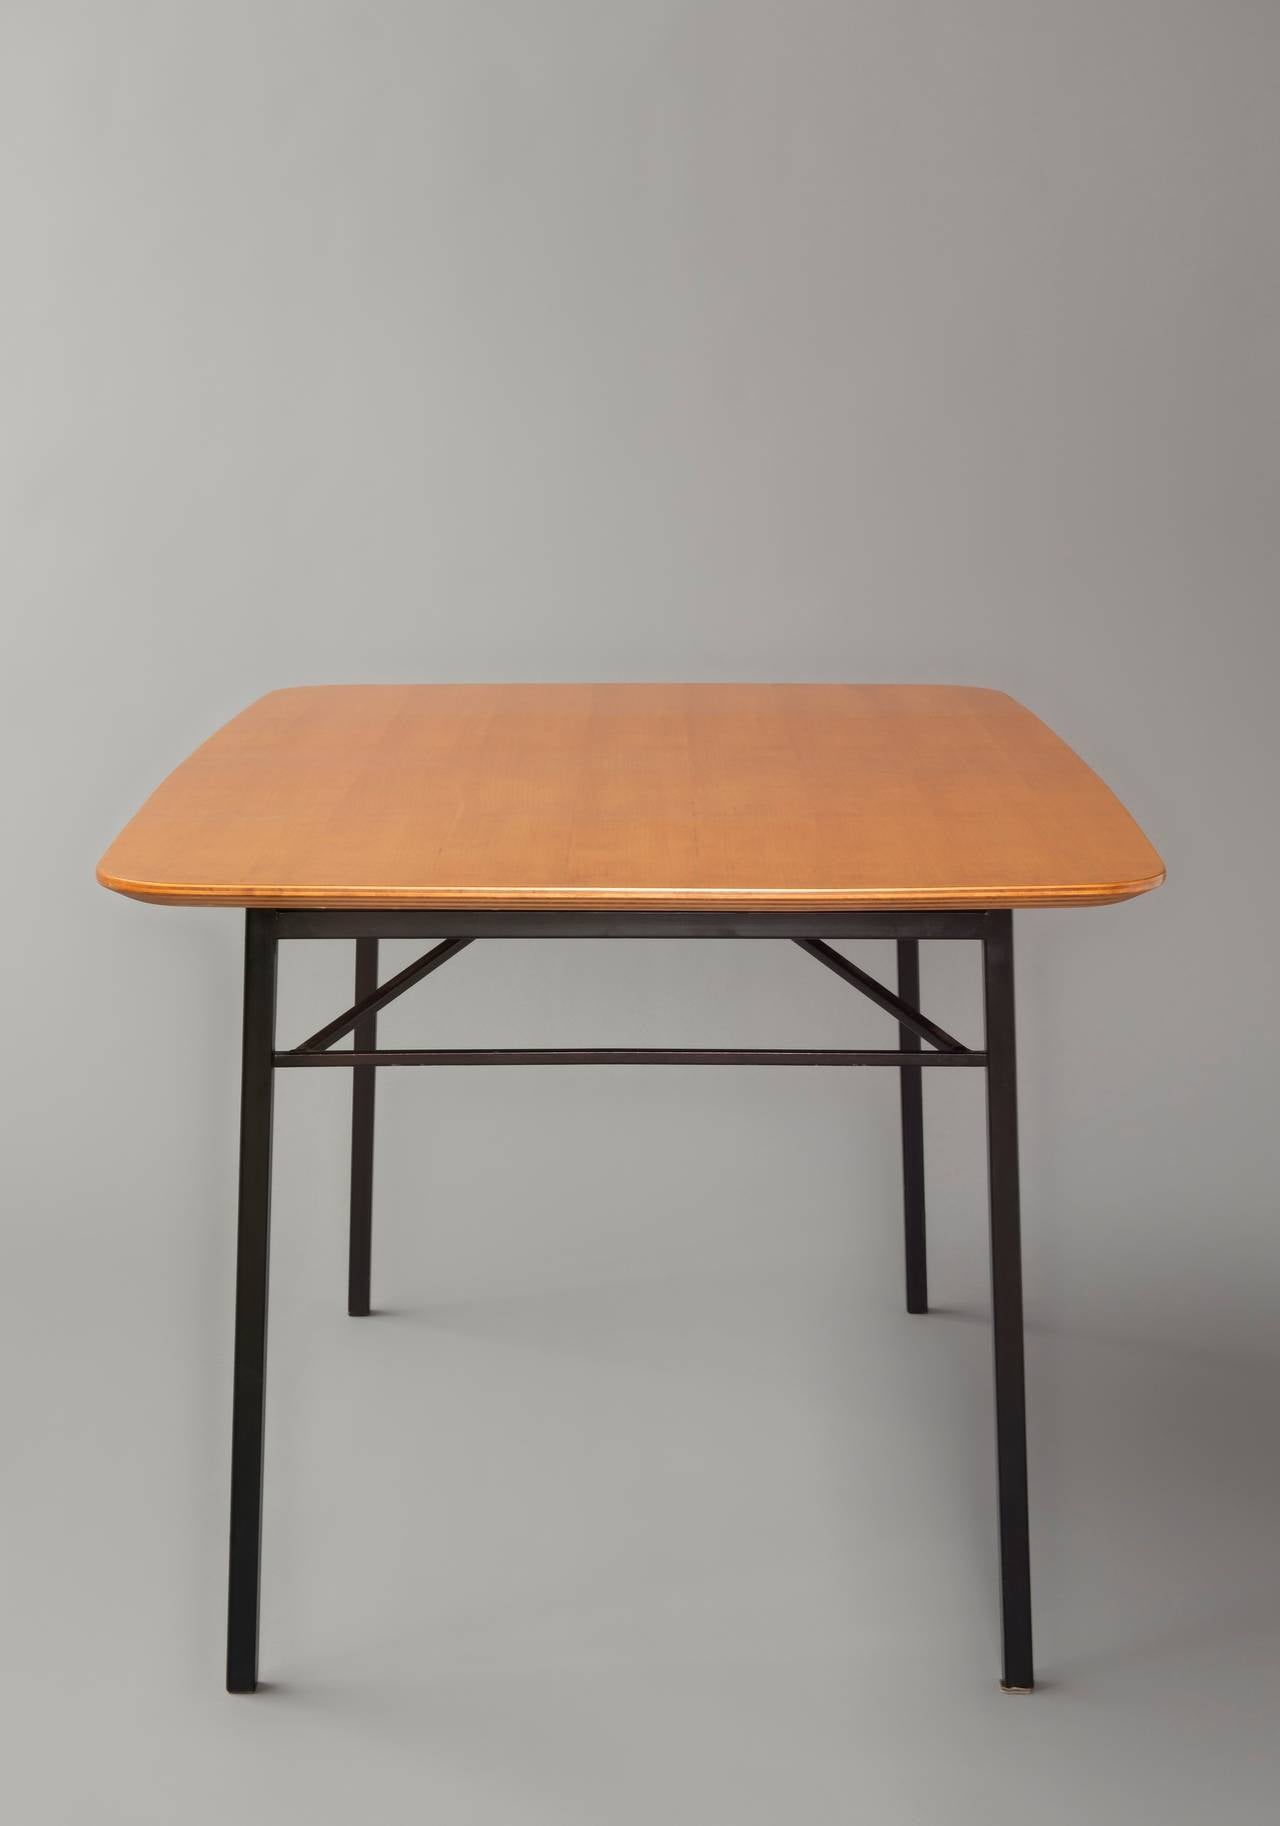 Rectangular table by André Simard (1927-)
André Simard edition - Circa 1955